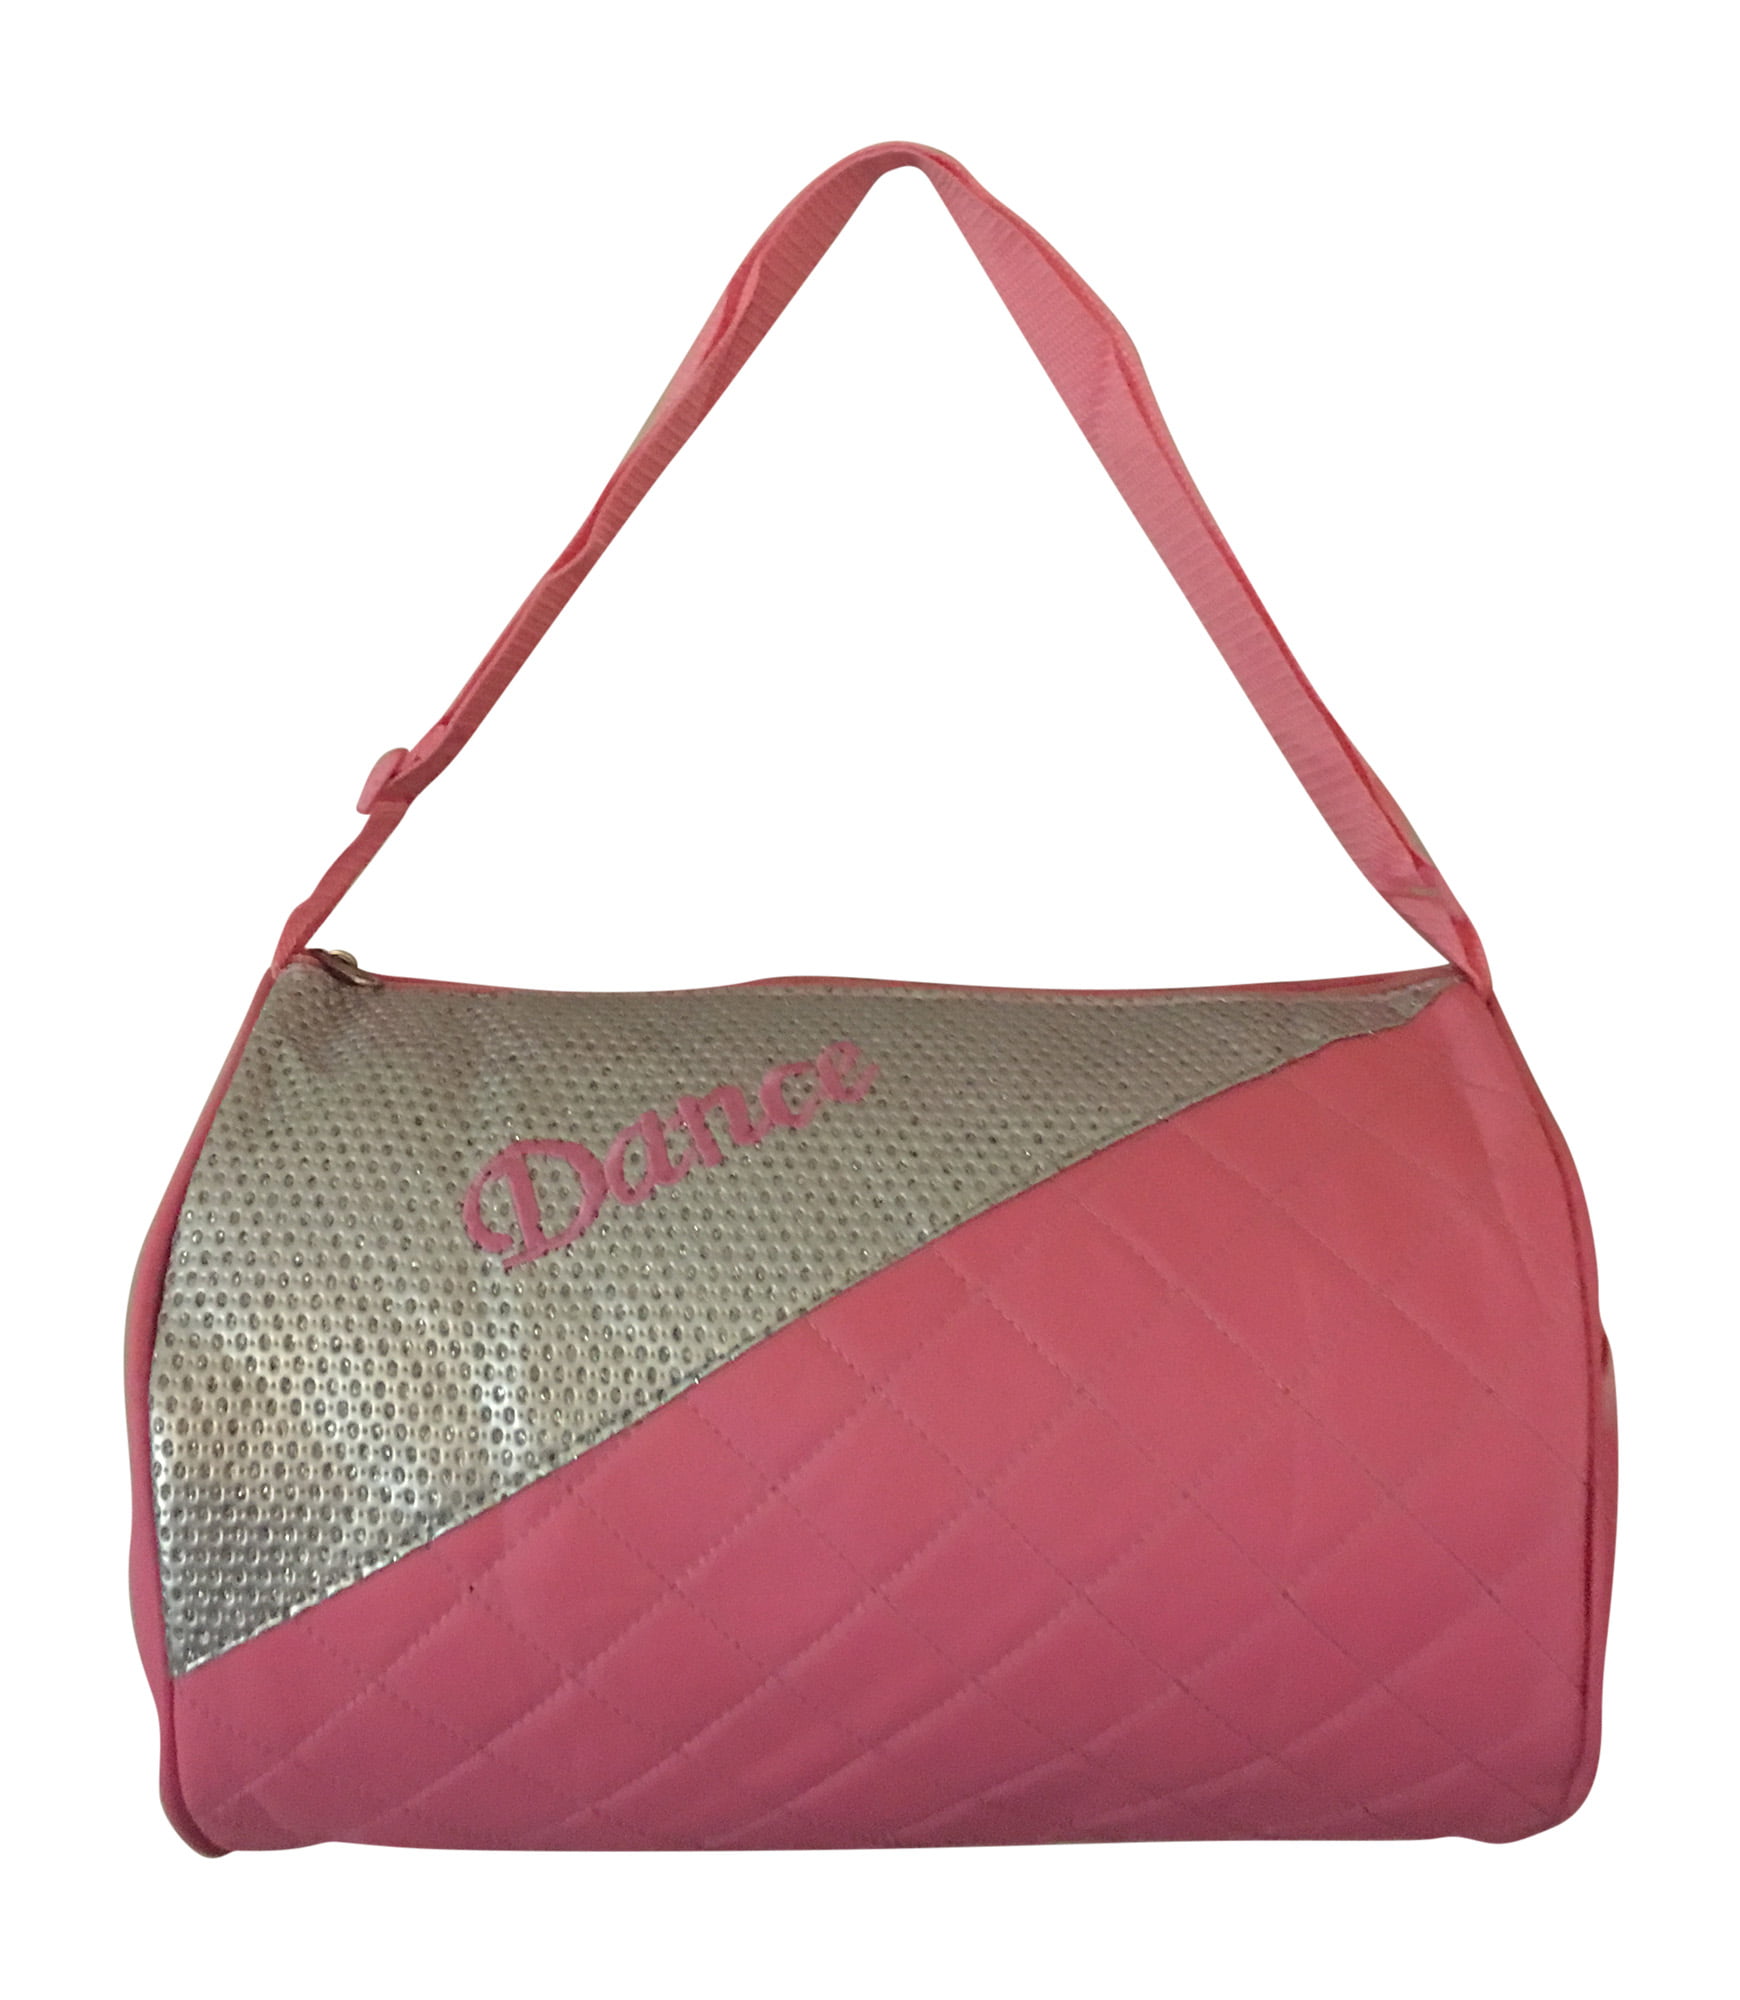 Girls Dance Duffle Bag Pink with Adjustable Shoulder Strap - www.waterandnature.org